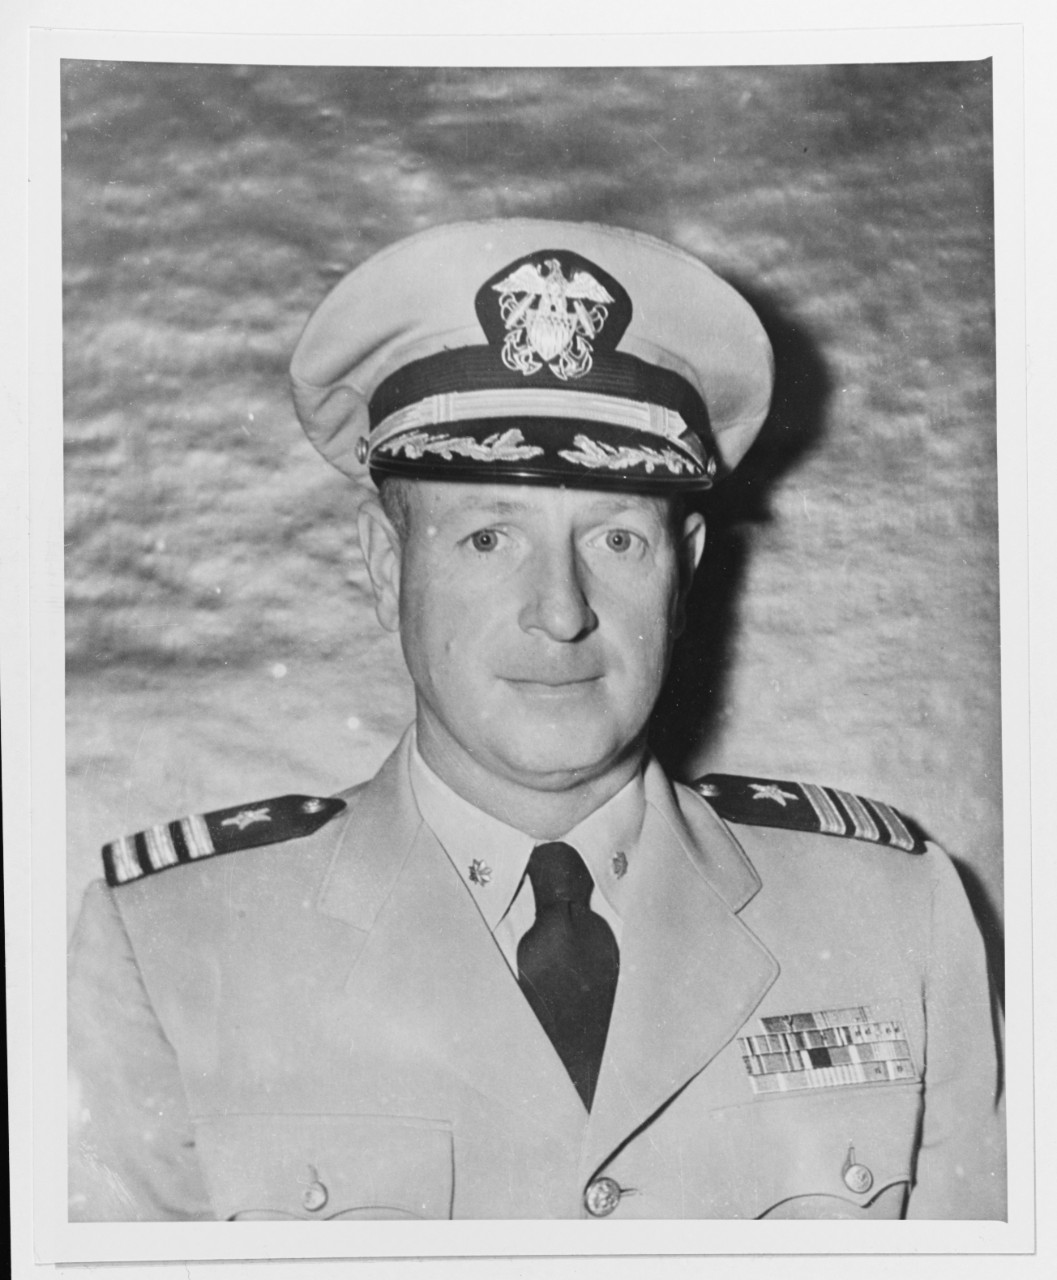 Commander Edward I. Gibson, USN